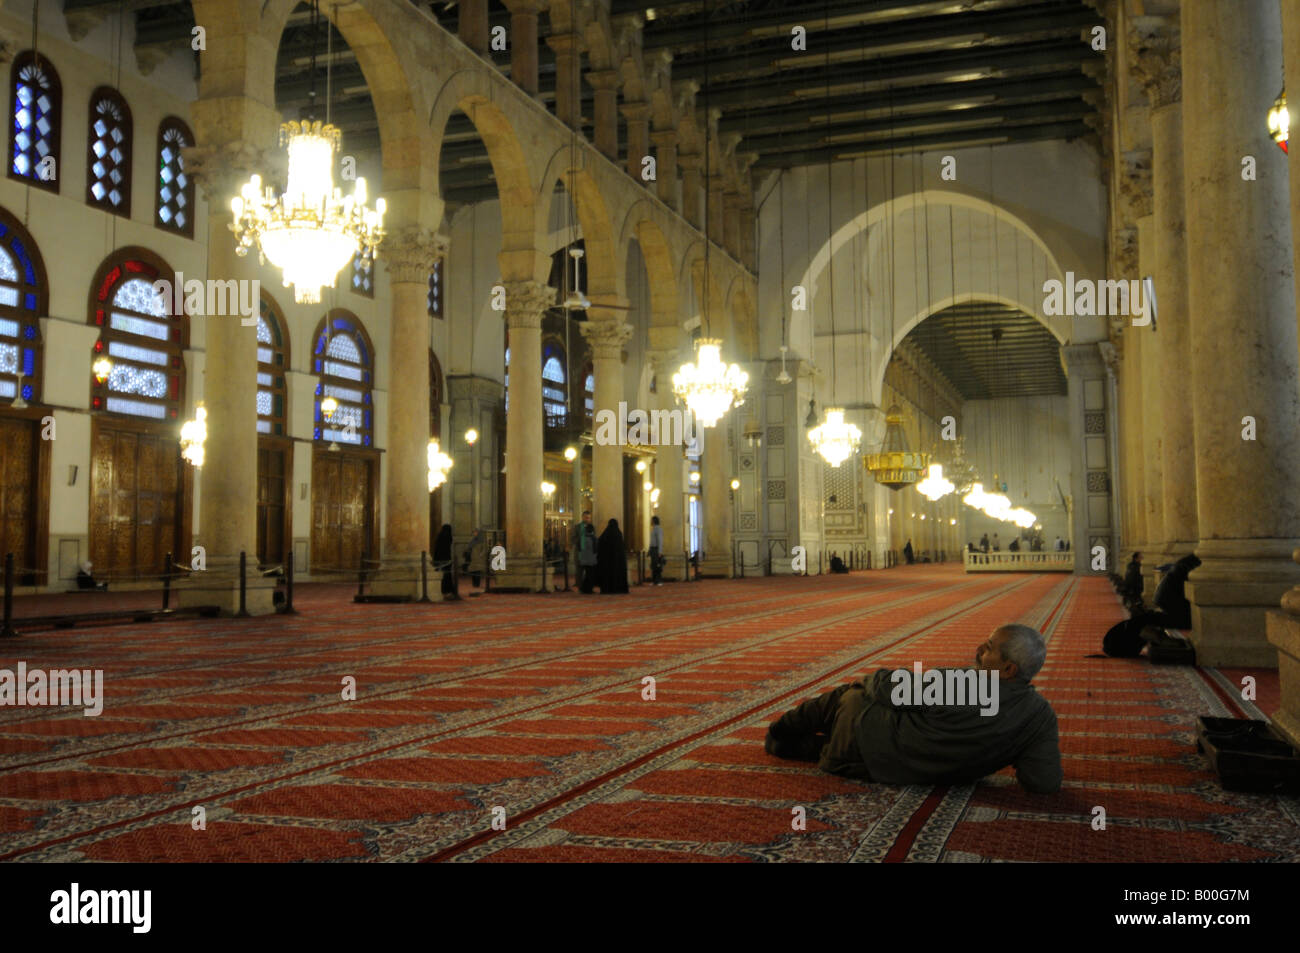 Interior of the Umayyad mosque, a historical religious landmark in Damascus, Syria. Stock Photo